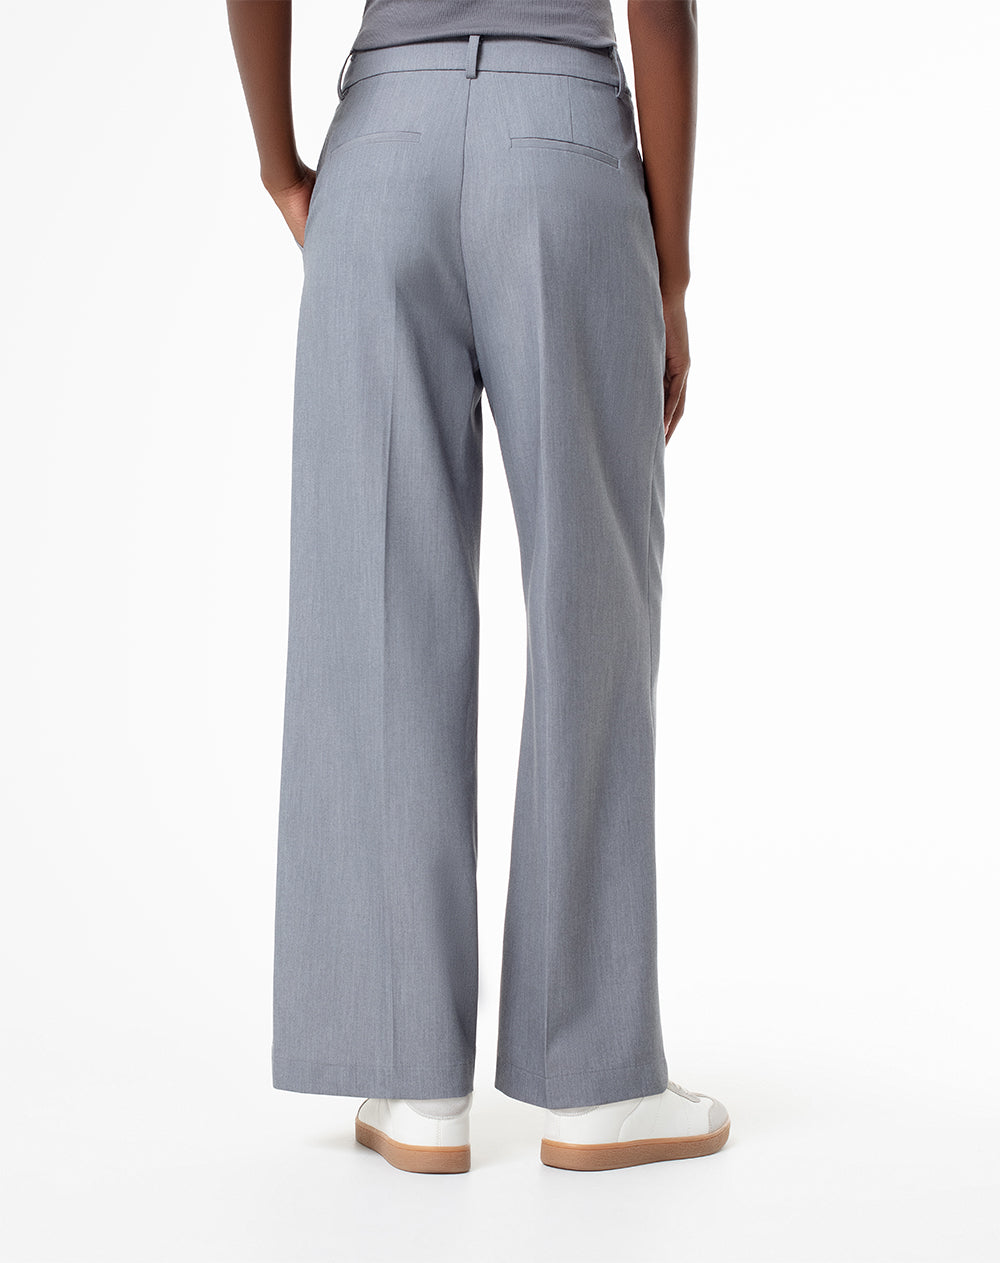 Pantalón regular fit tiro alto gris jaspe